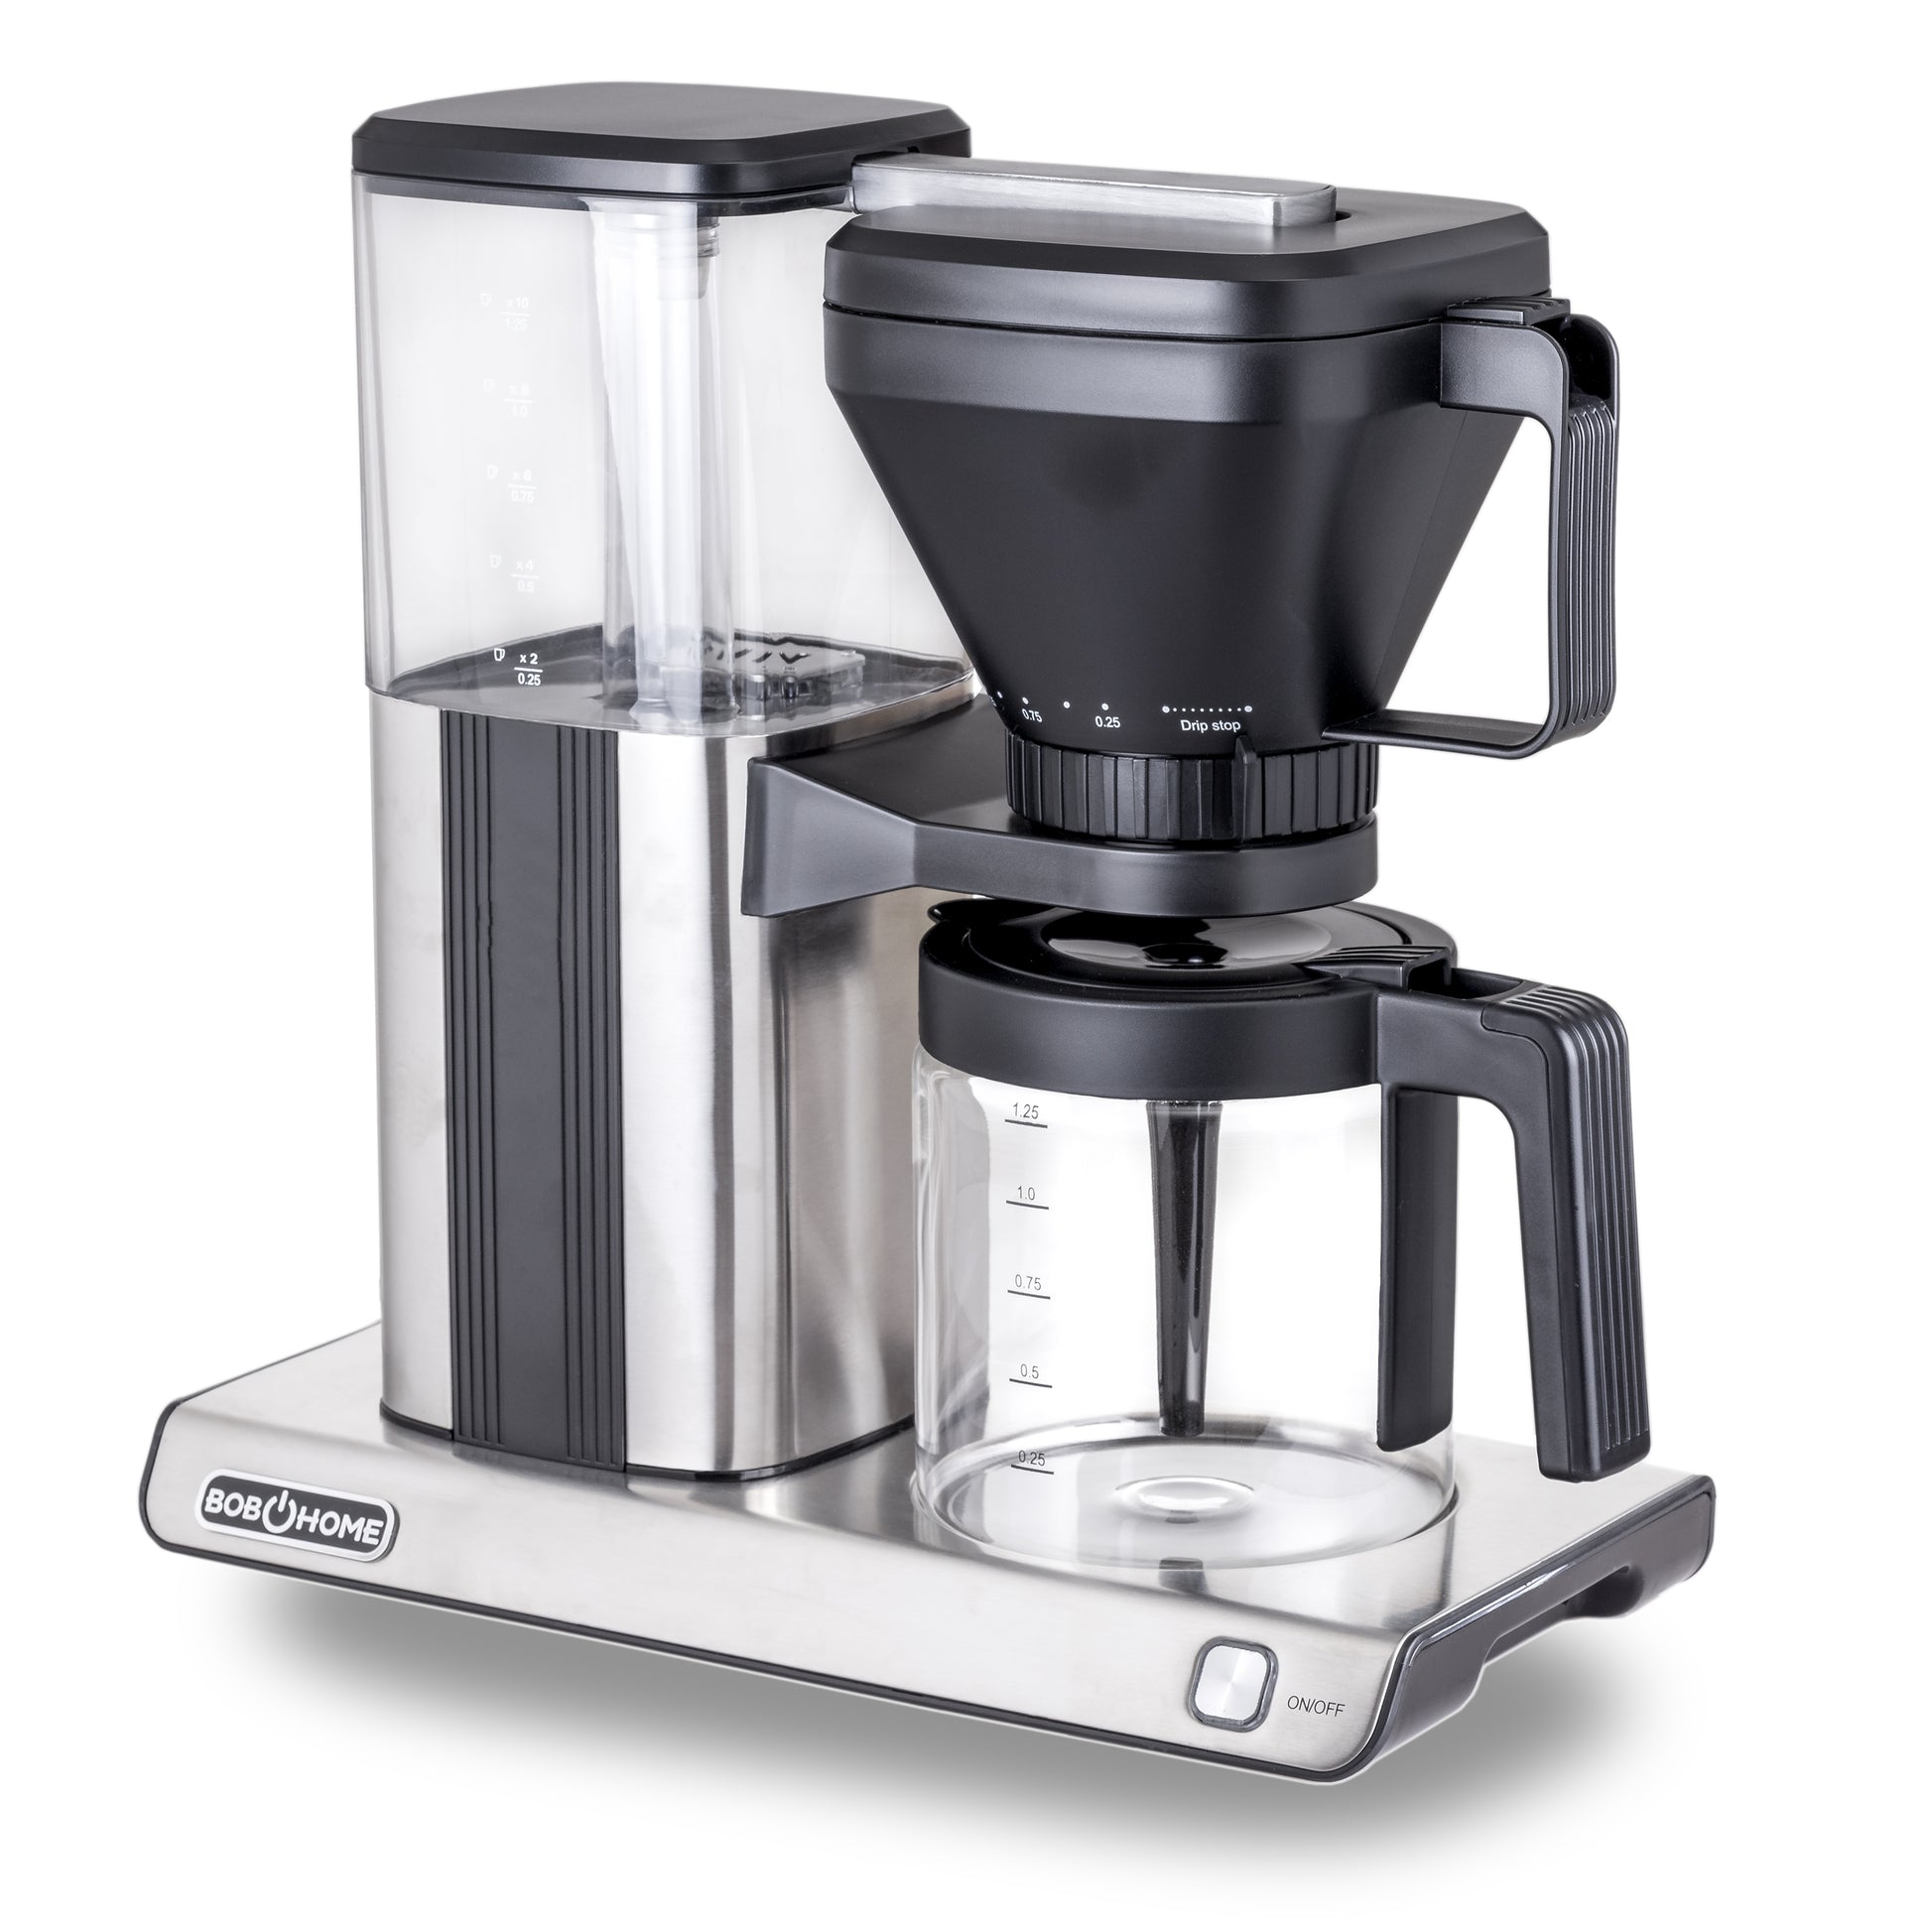 Filterkaffeemaschine PERFECT CAFE - BOB HOME - modern lifestyle products